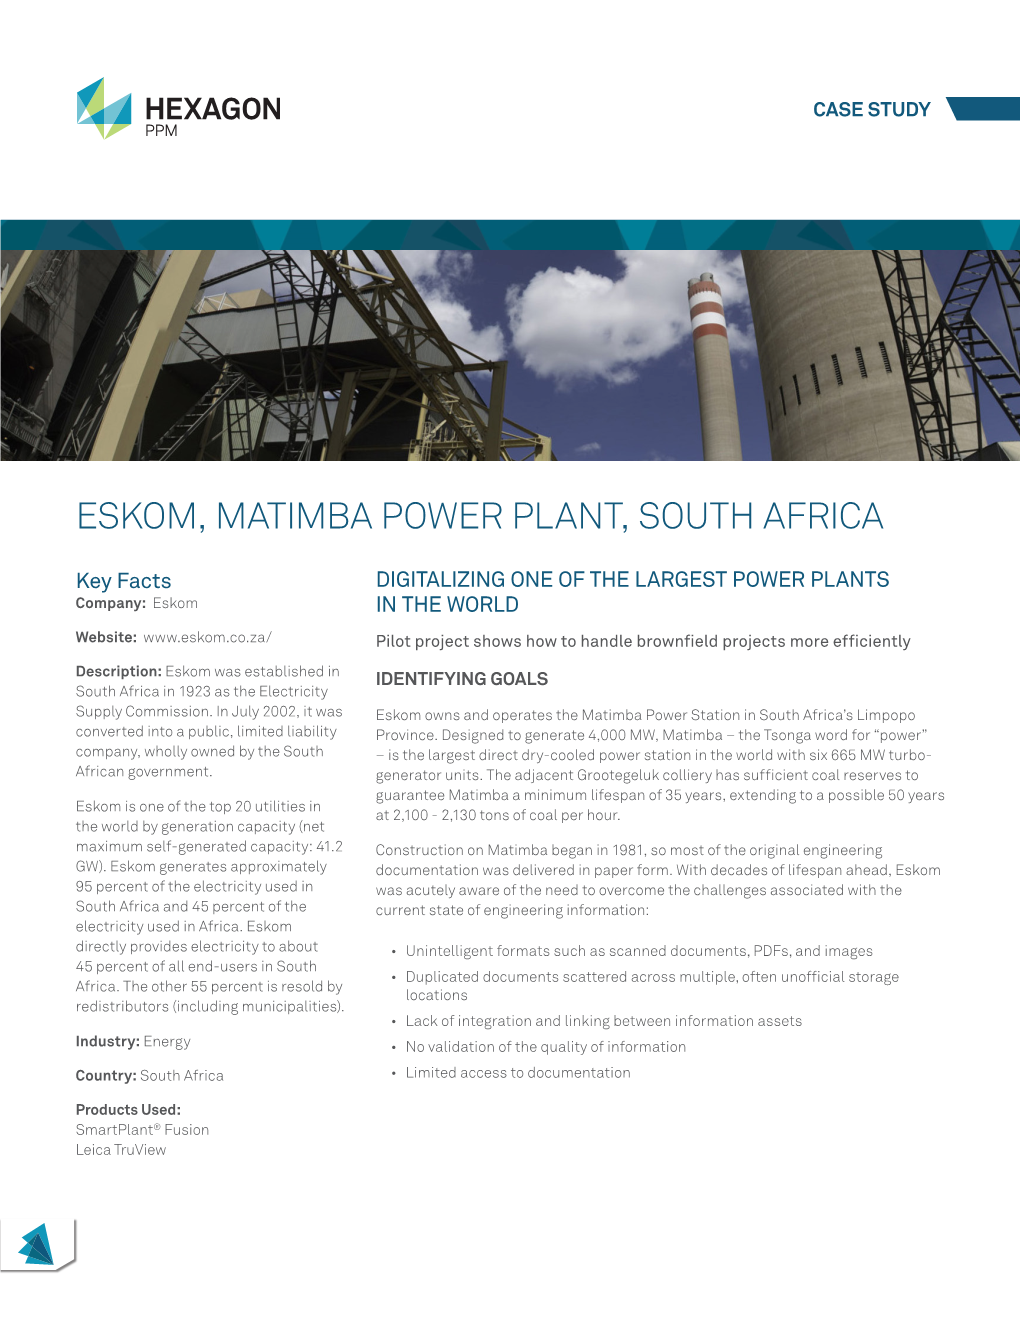 Eskom, Matimba Power Plant, South Africa